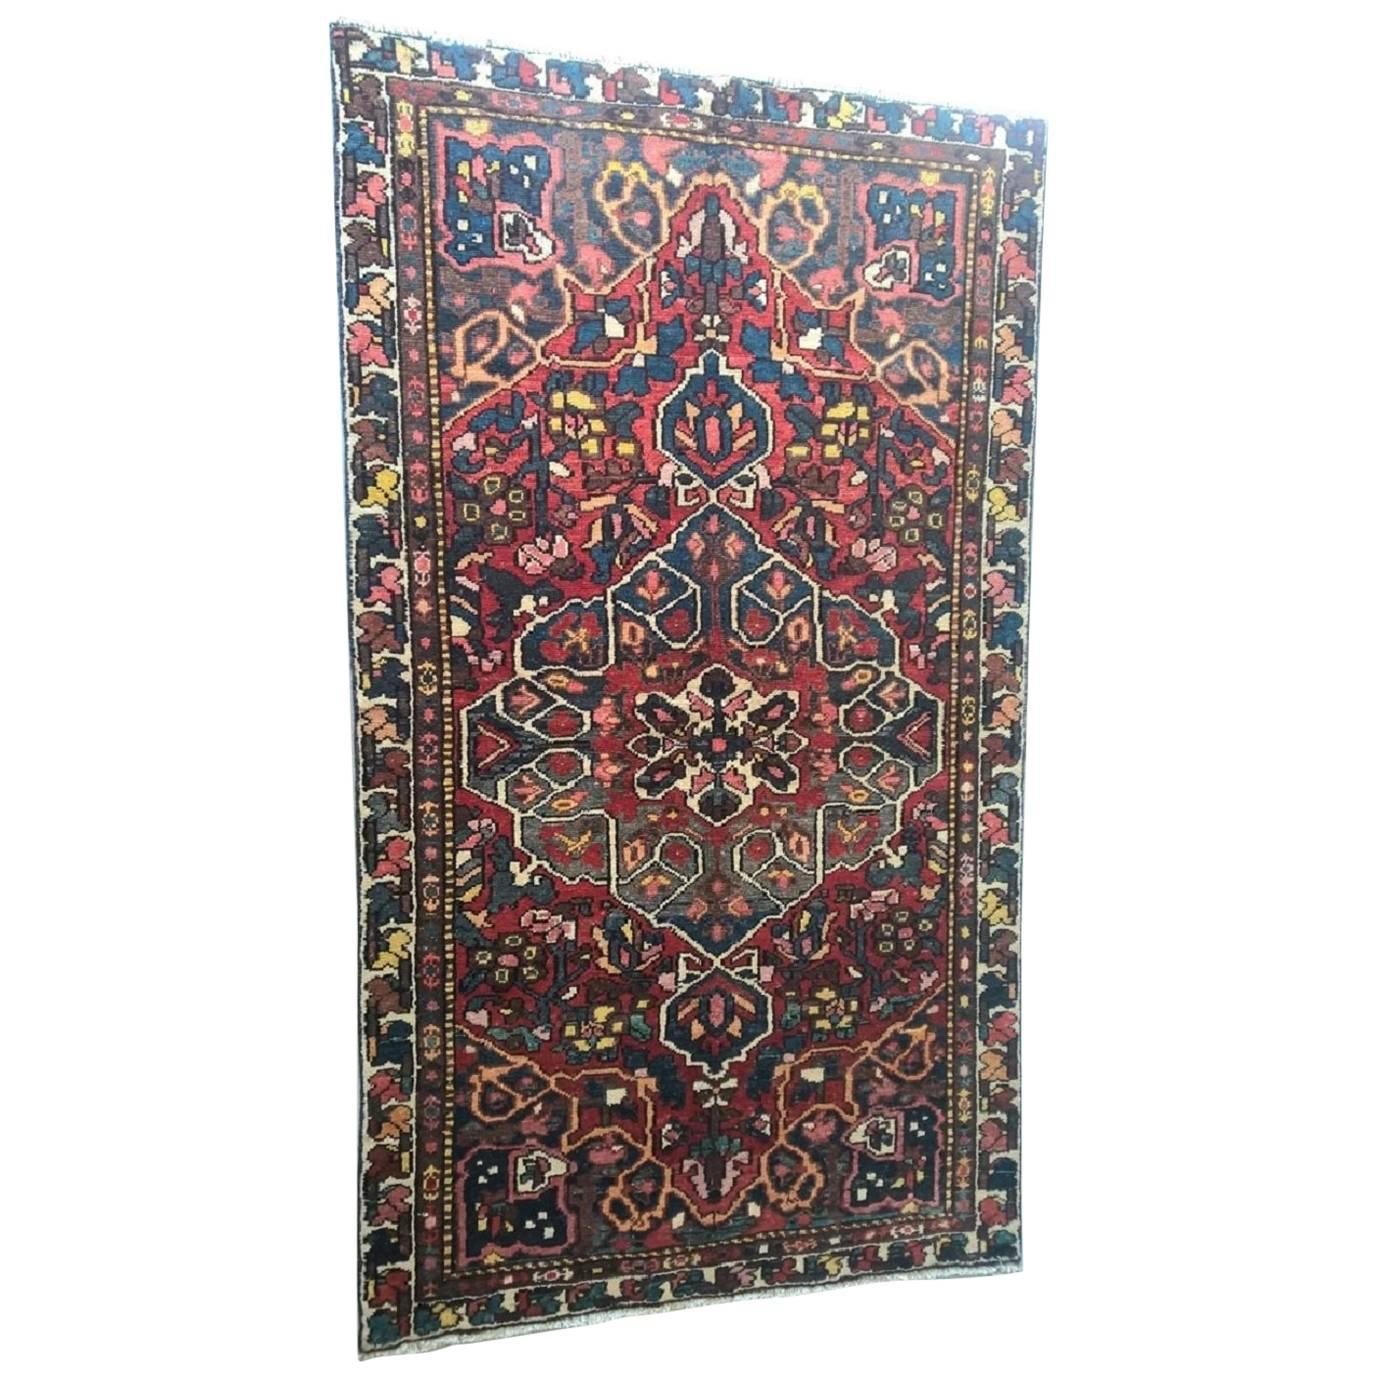 Bakhtiar Persian Carpet from the 20th century.